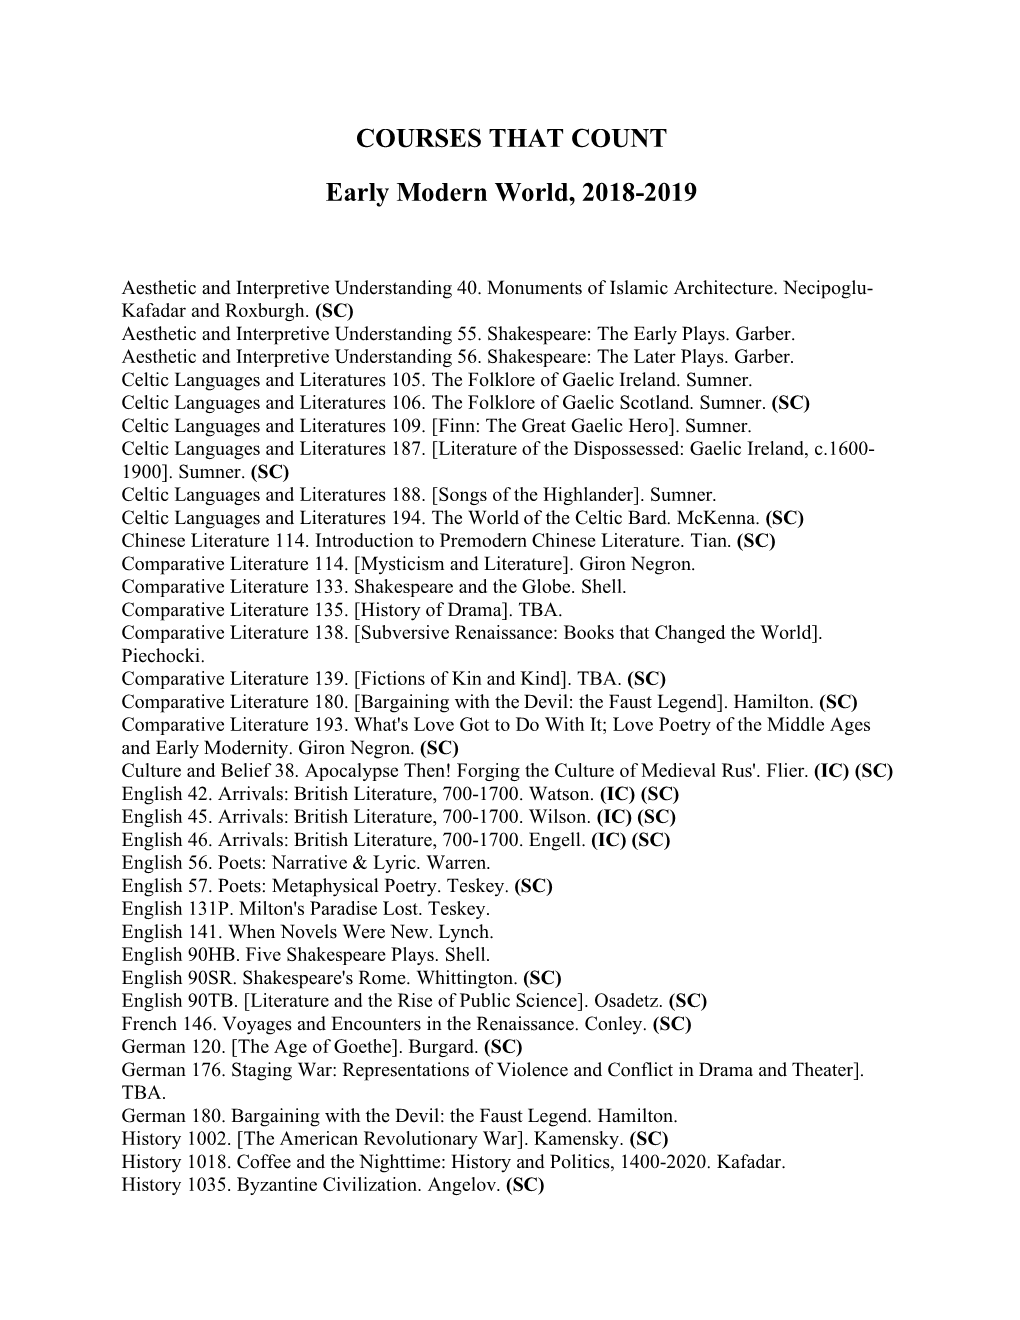 Early Modern World, 2018-2019